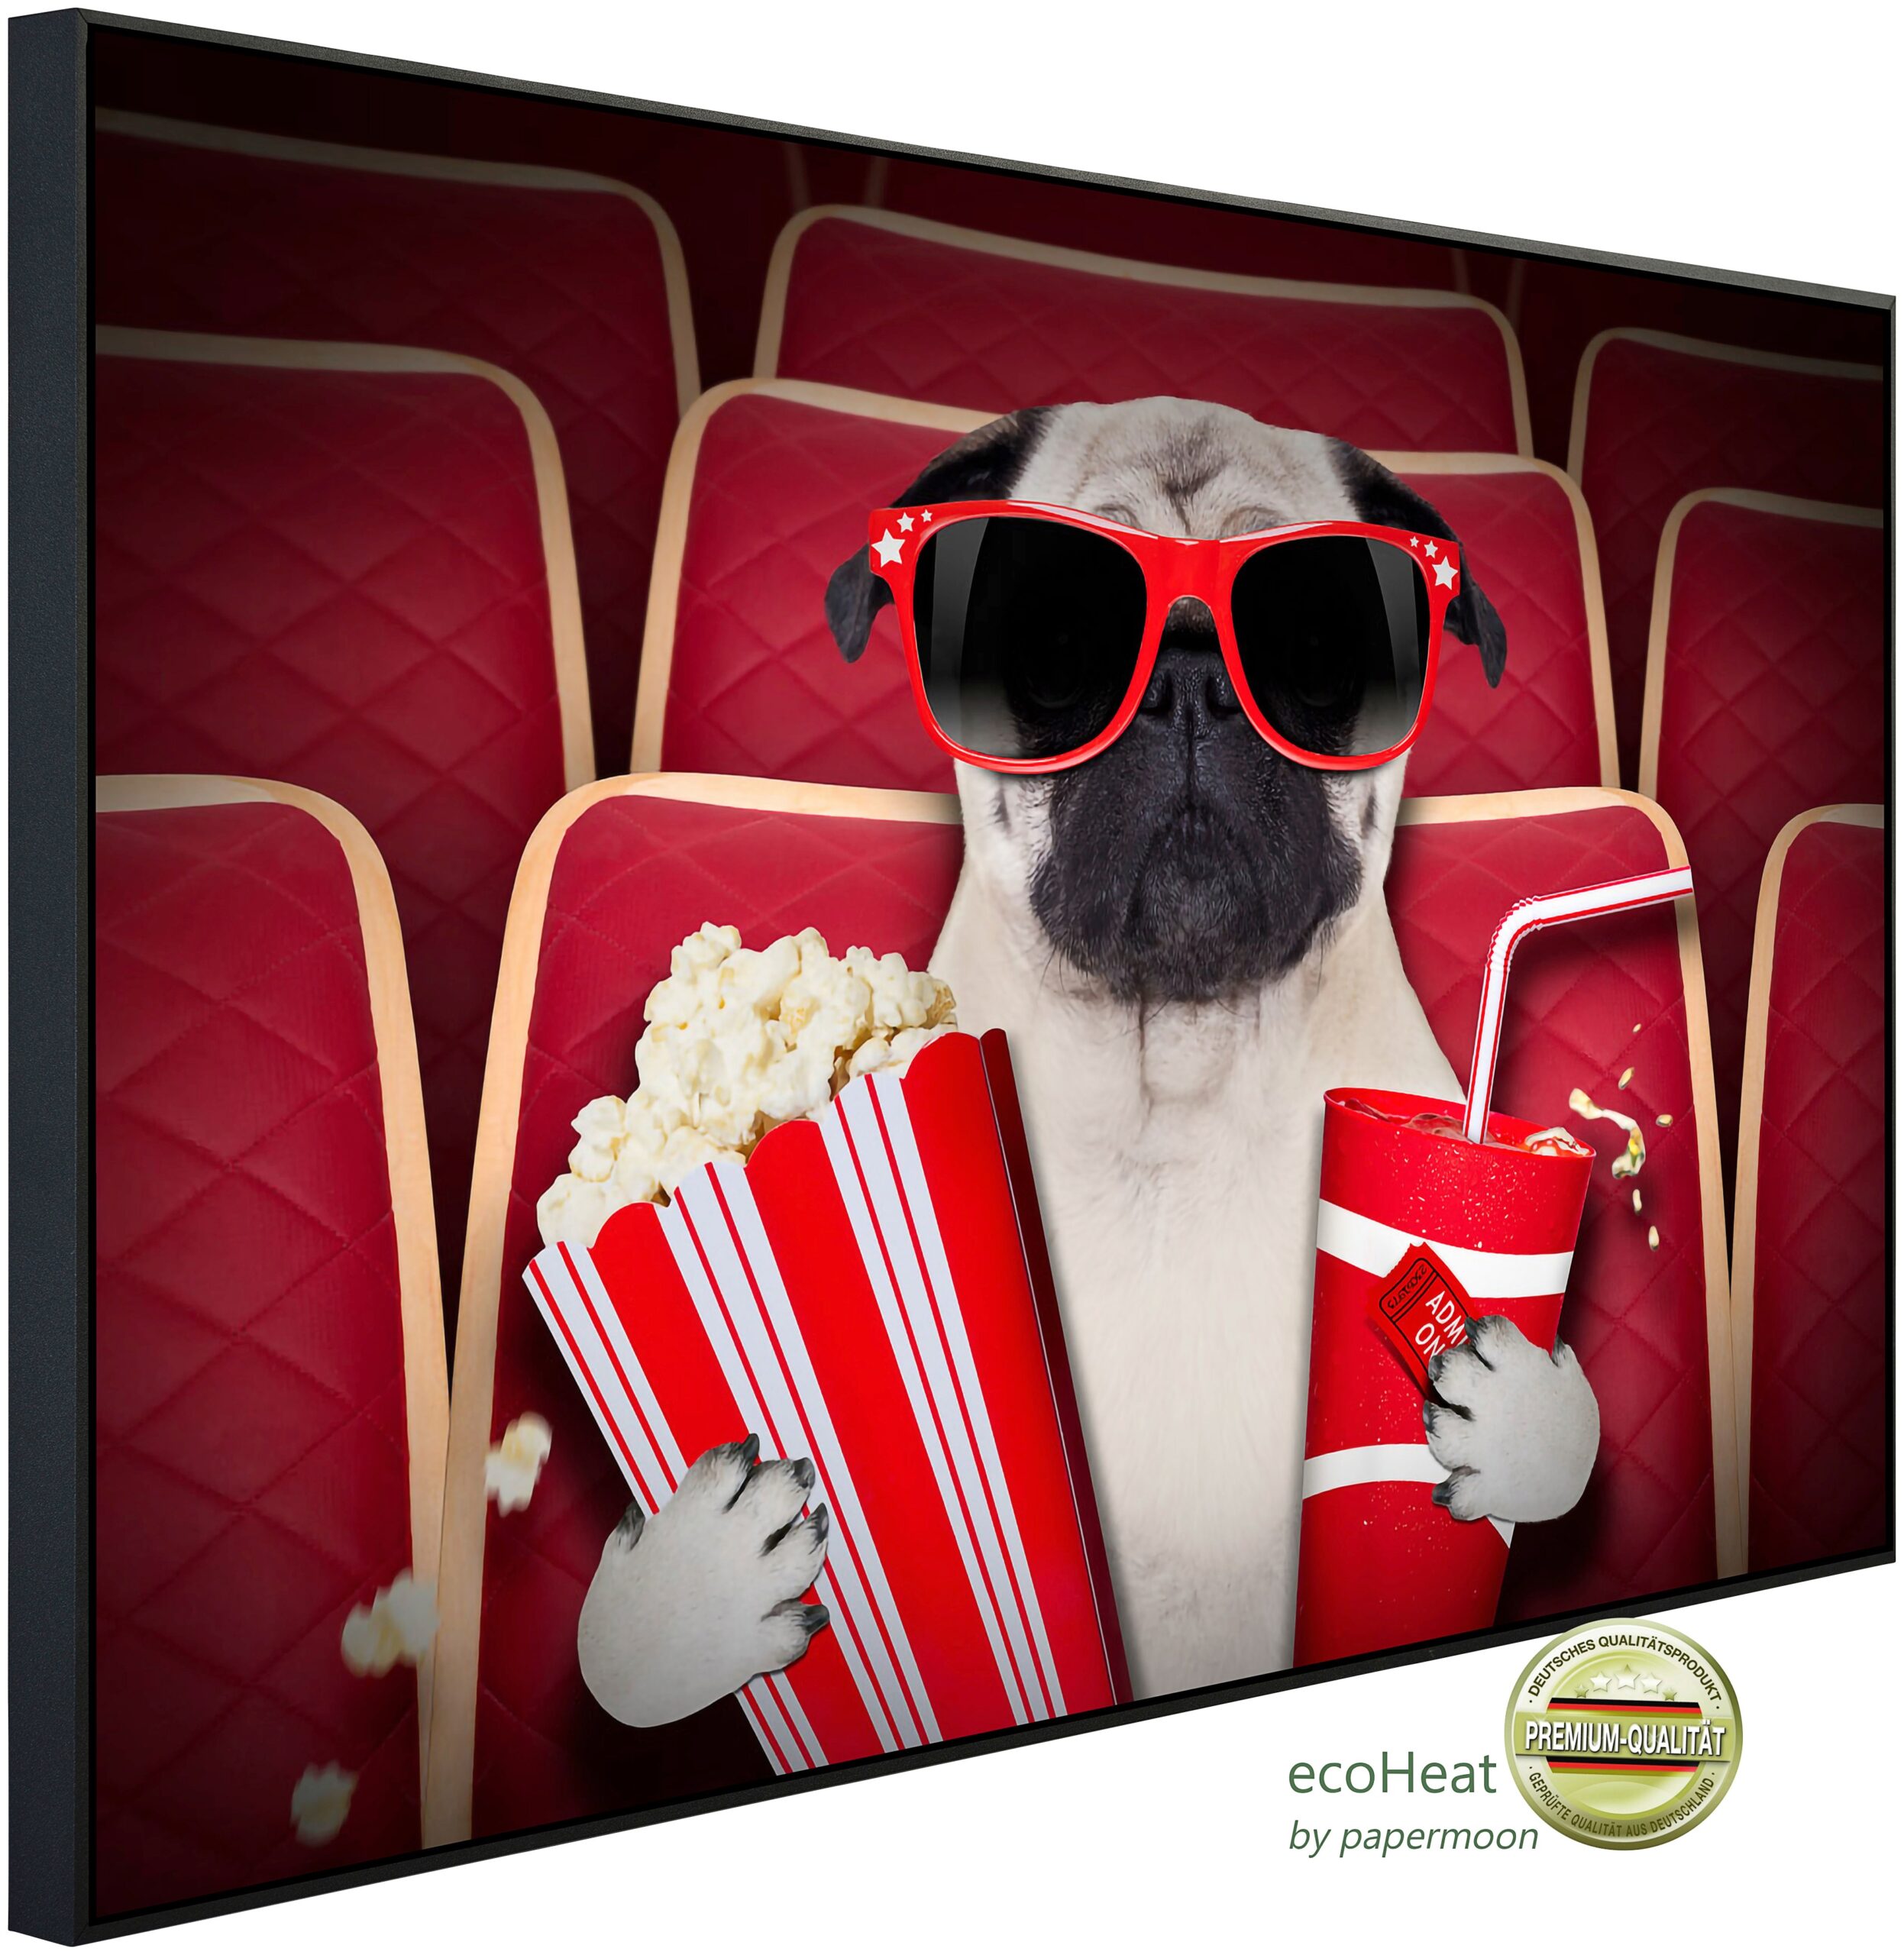 Papermoon Infrarotheizung "Hund im Kino", sehr angenehme Strahlungswärme